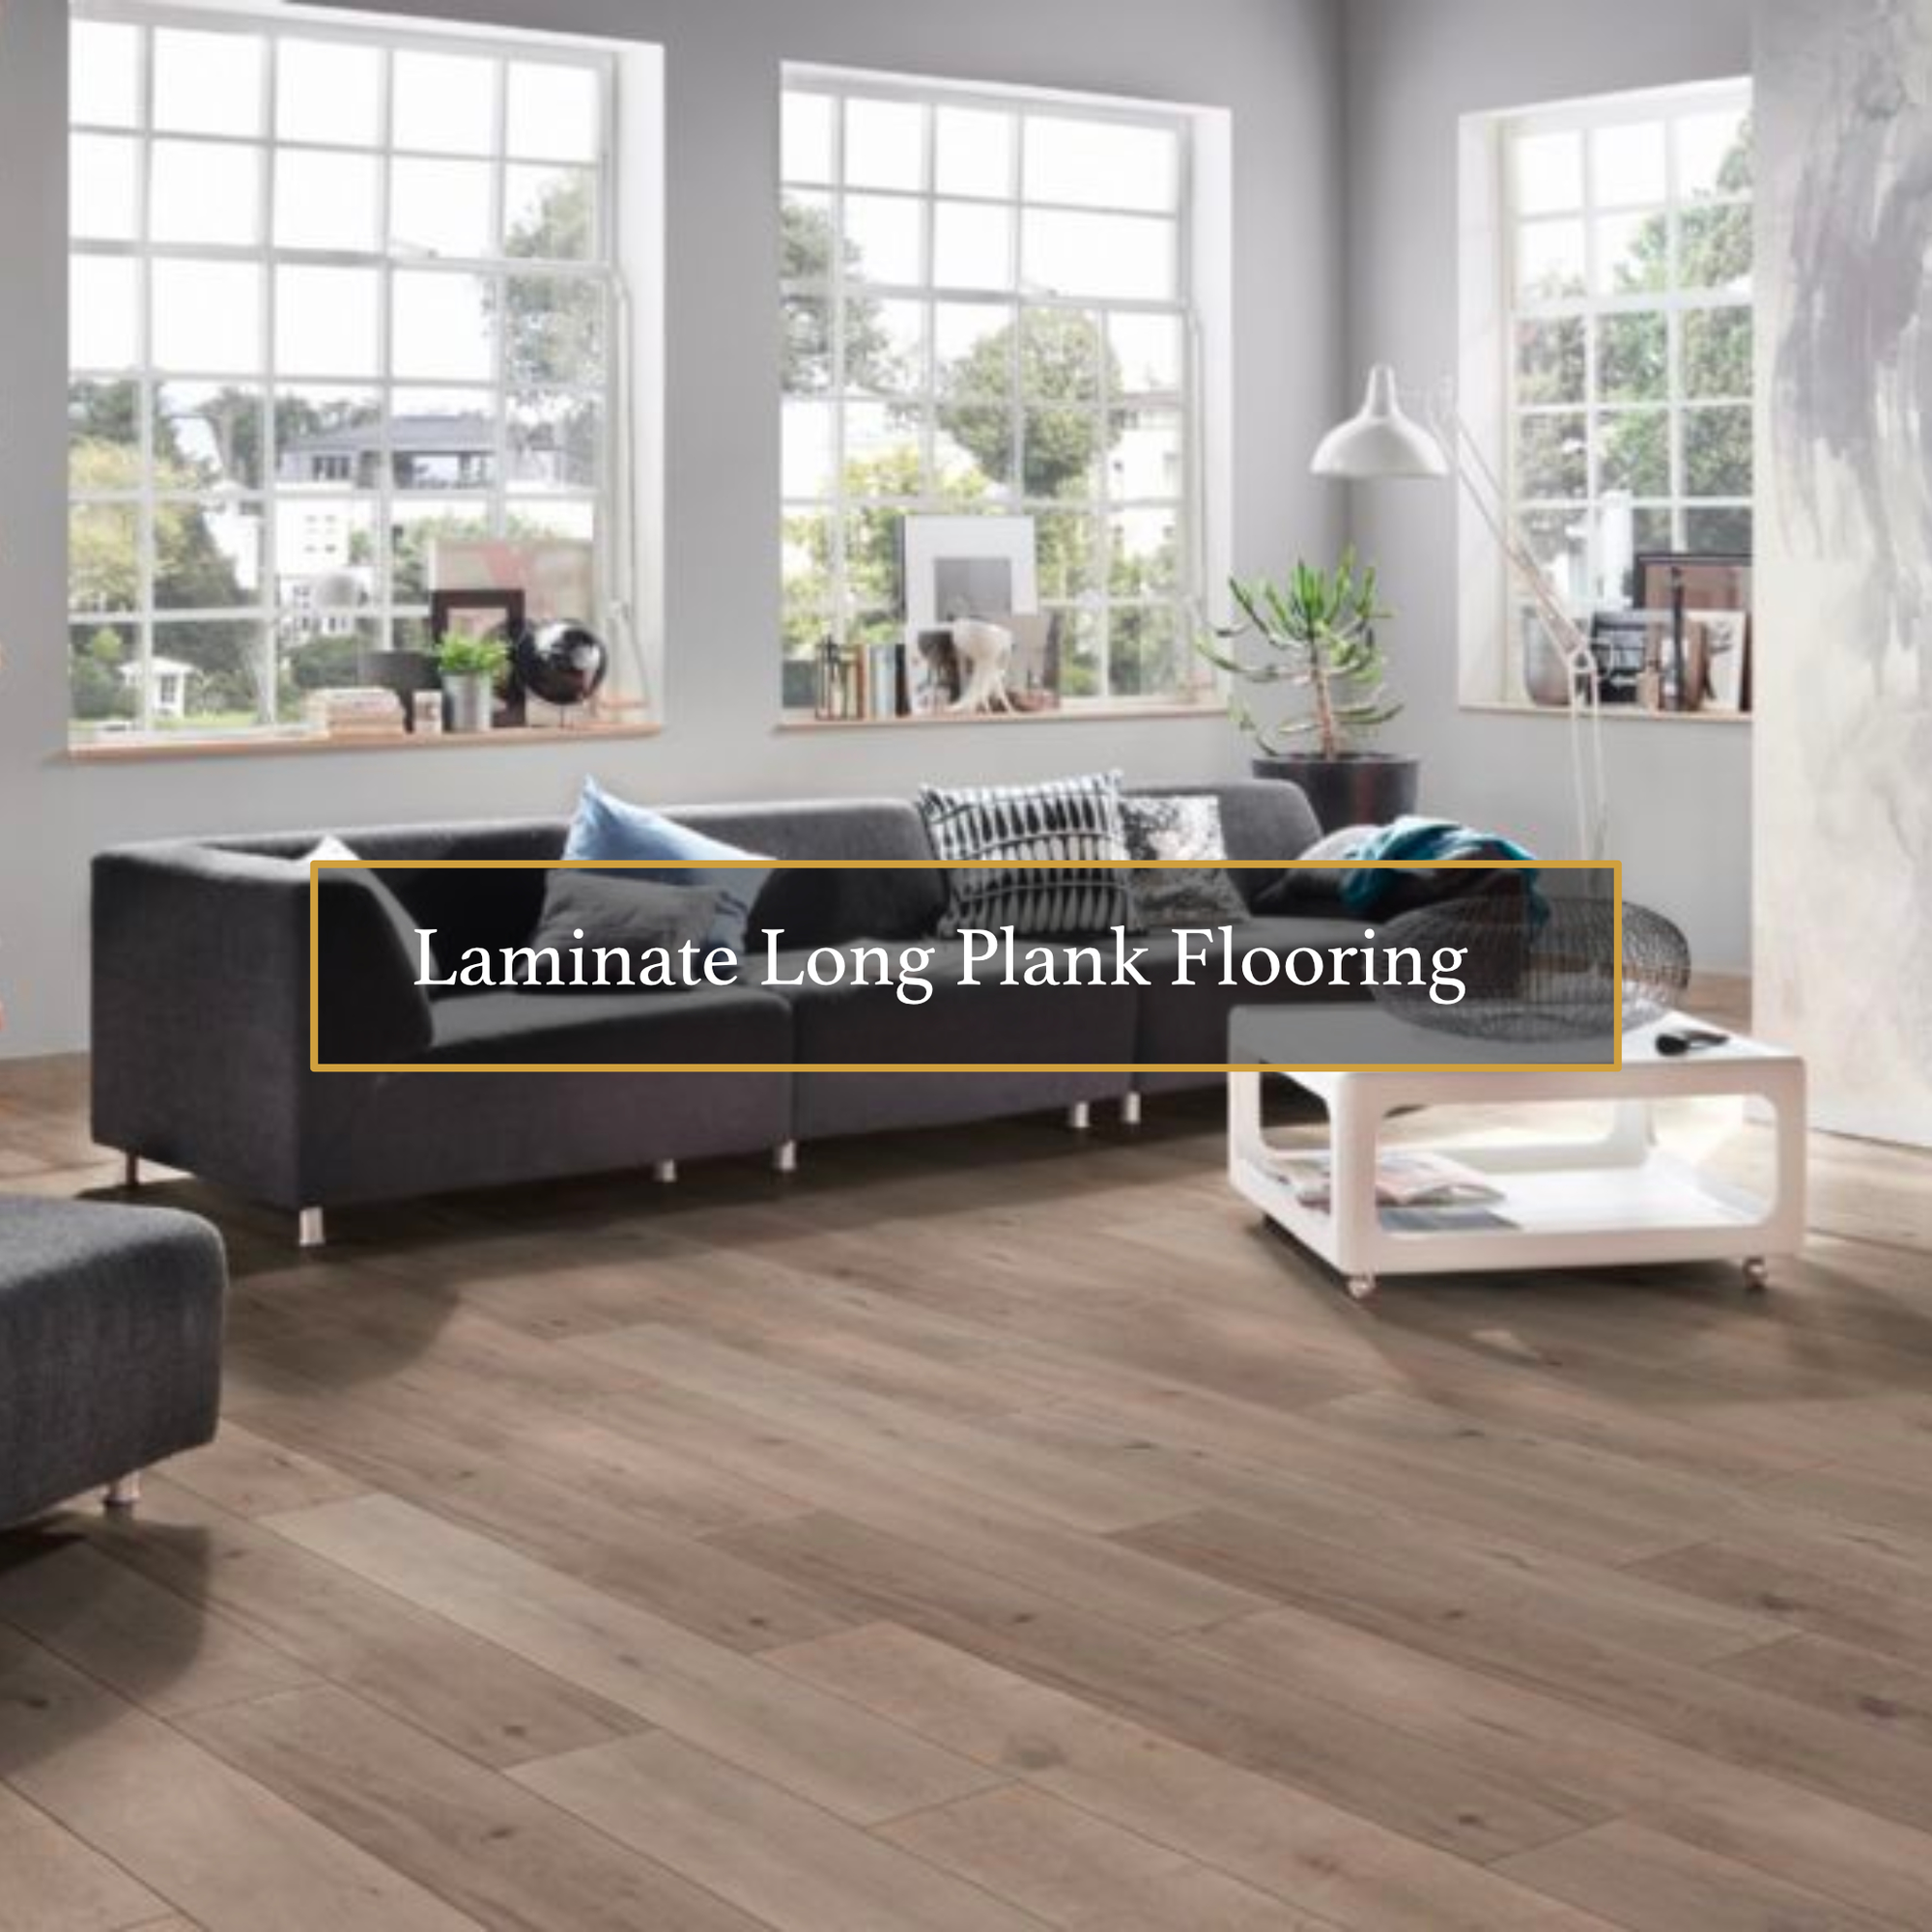 Laminate Long Plank Flooring